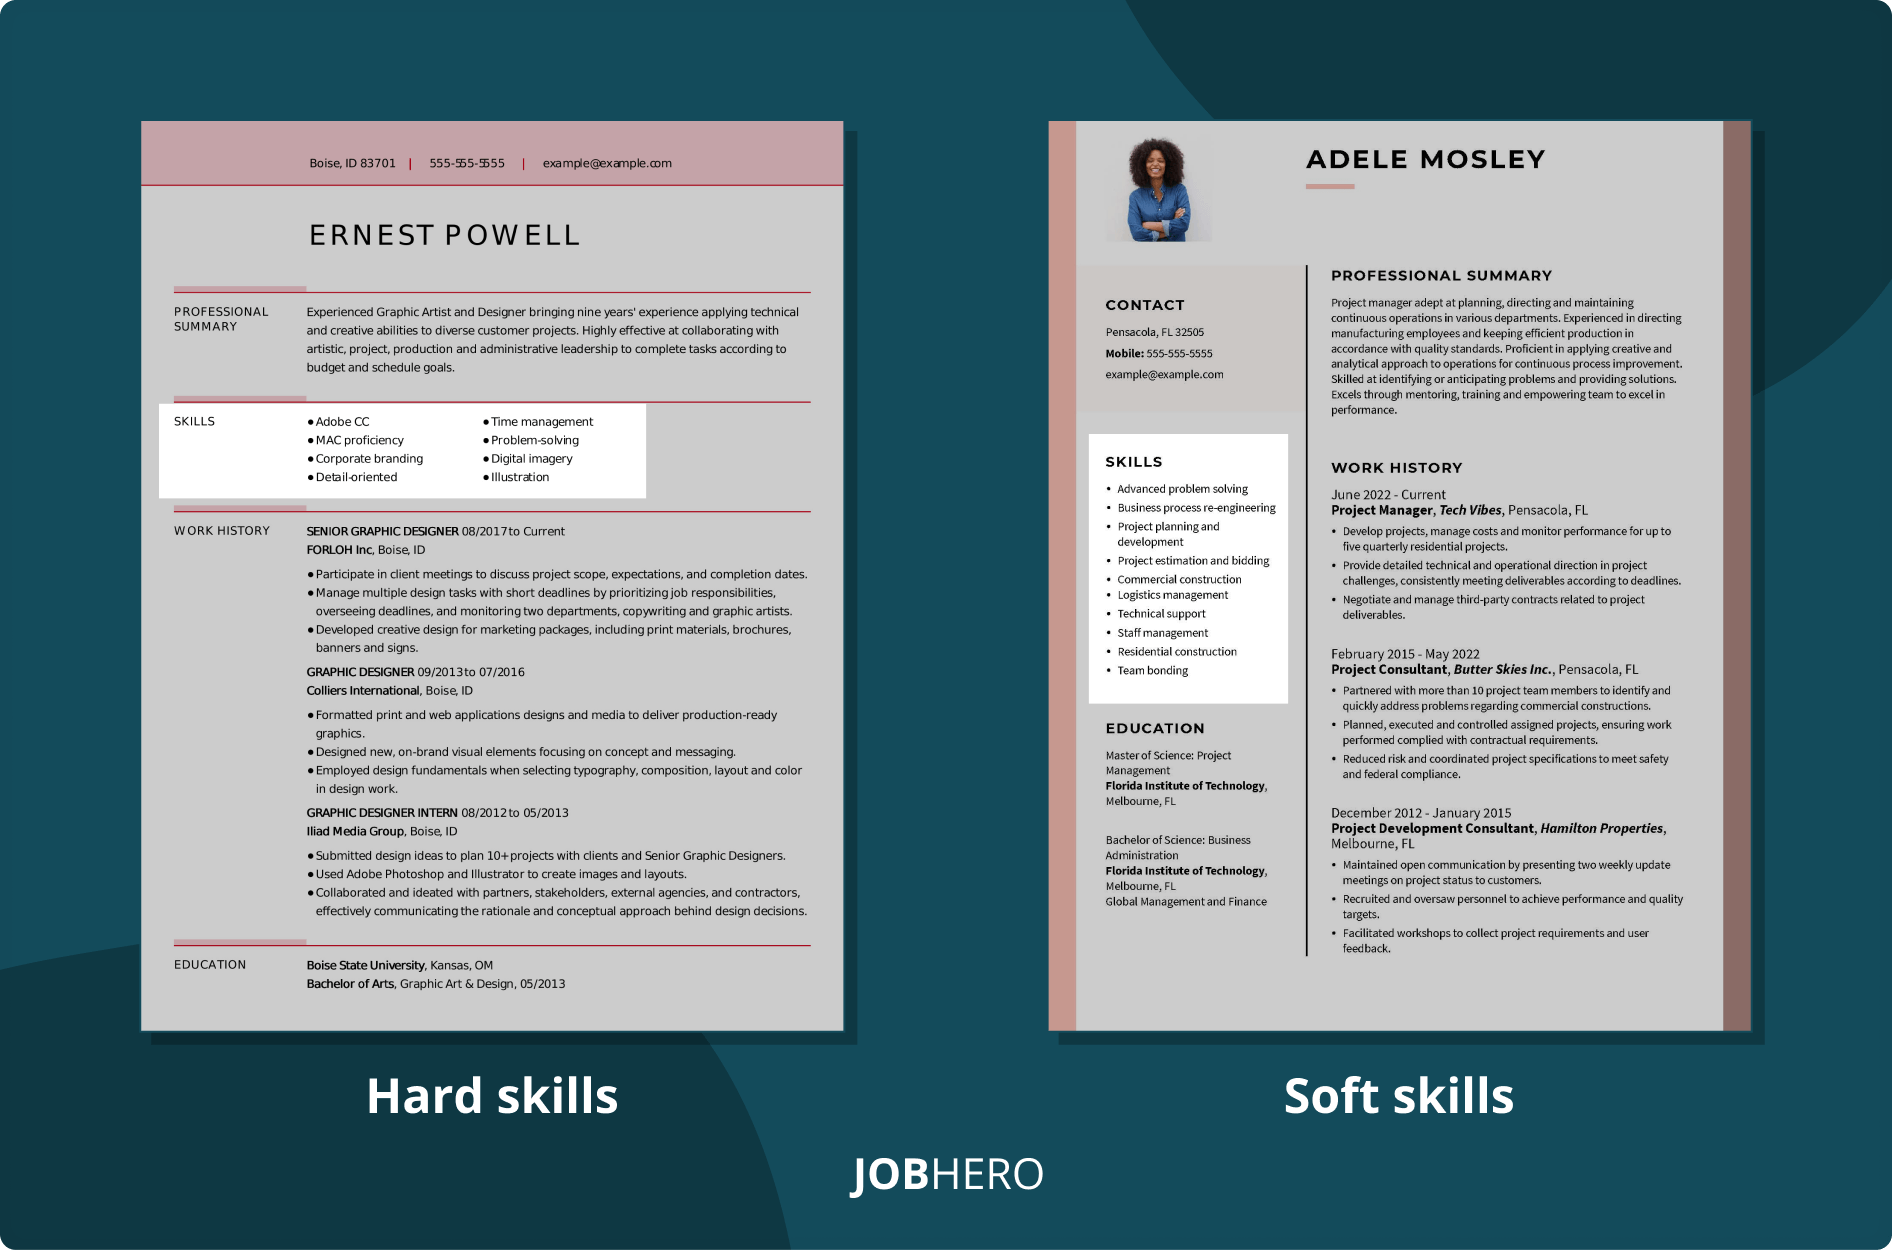 Hard skill and soft skill